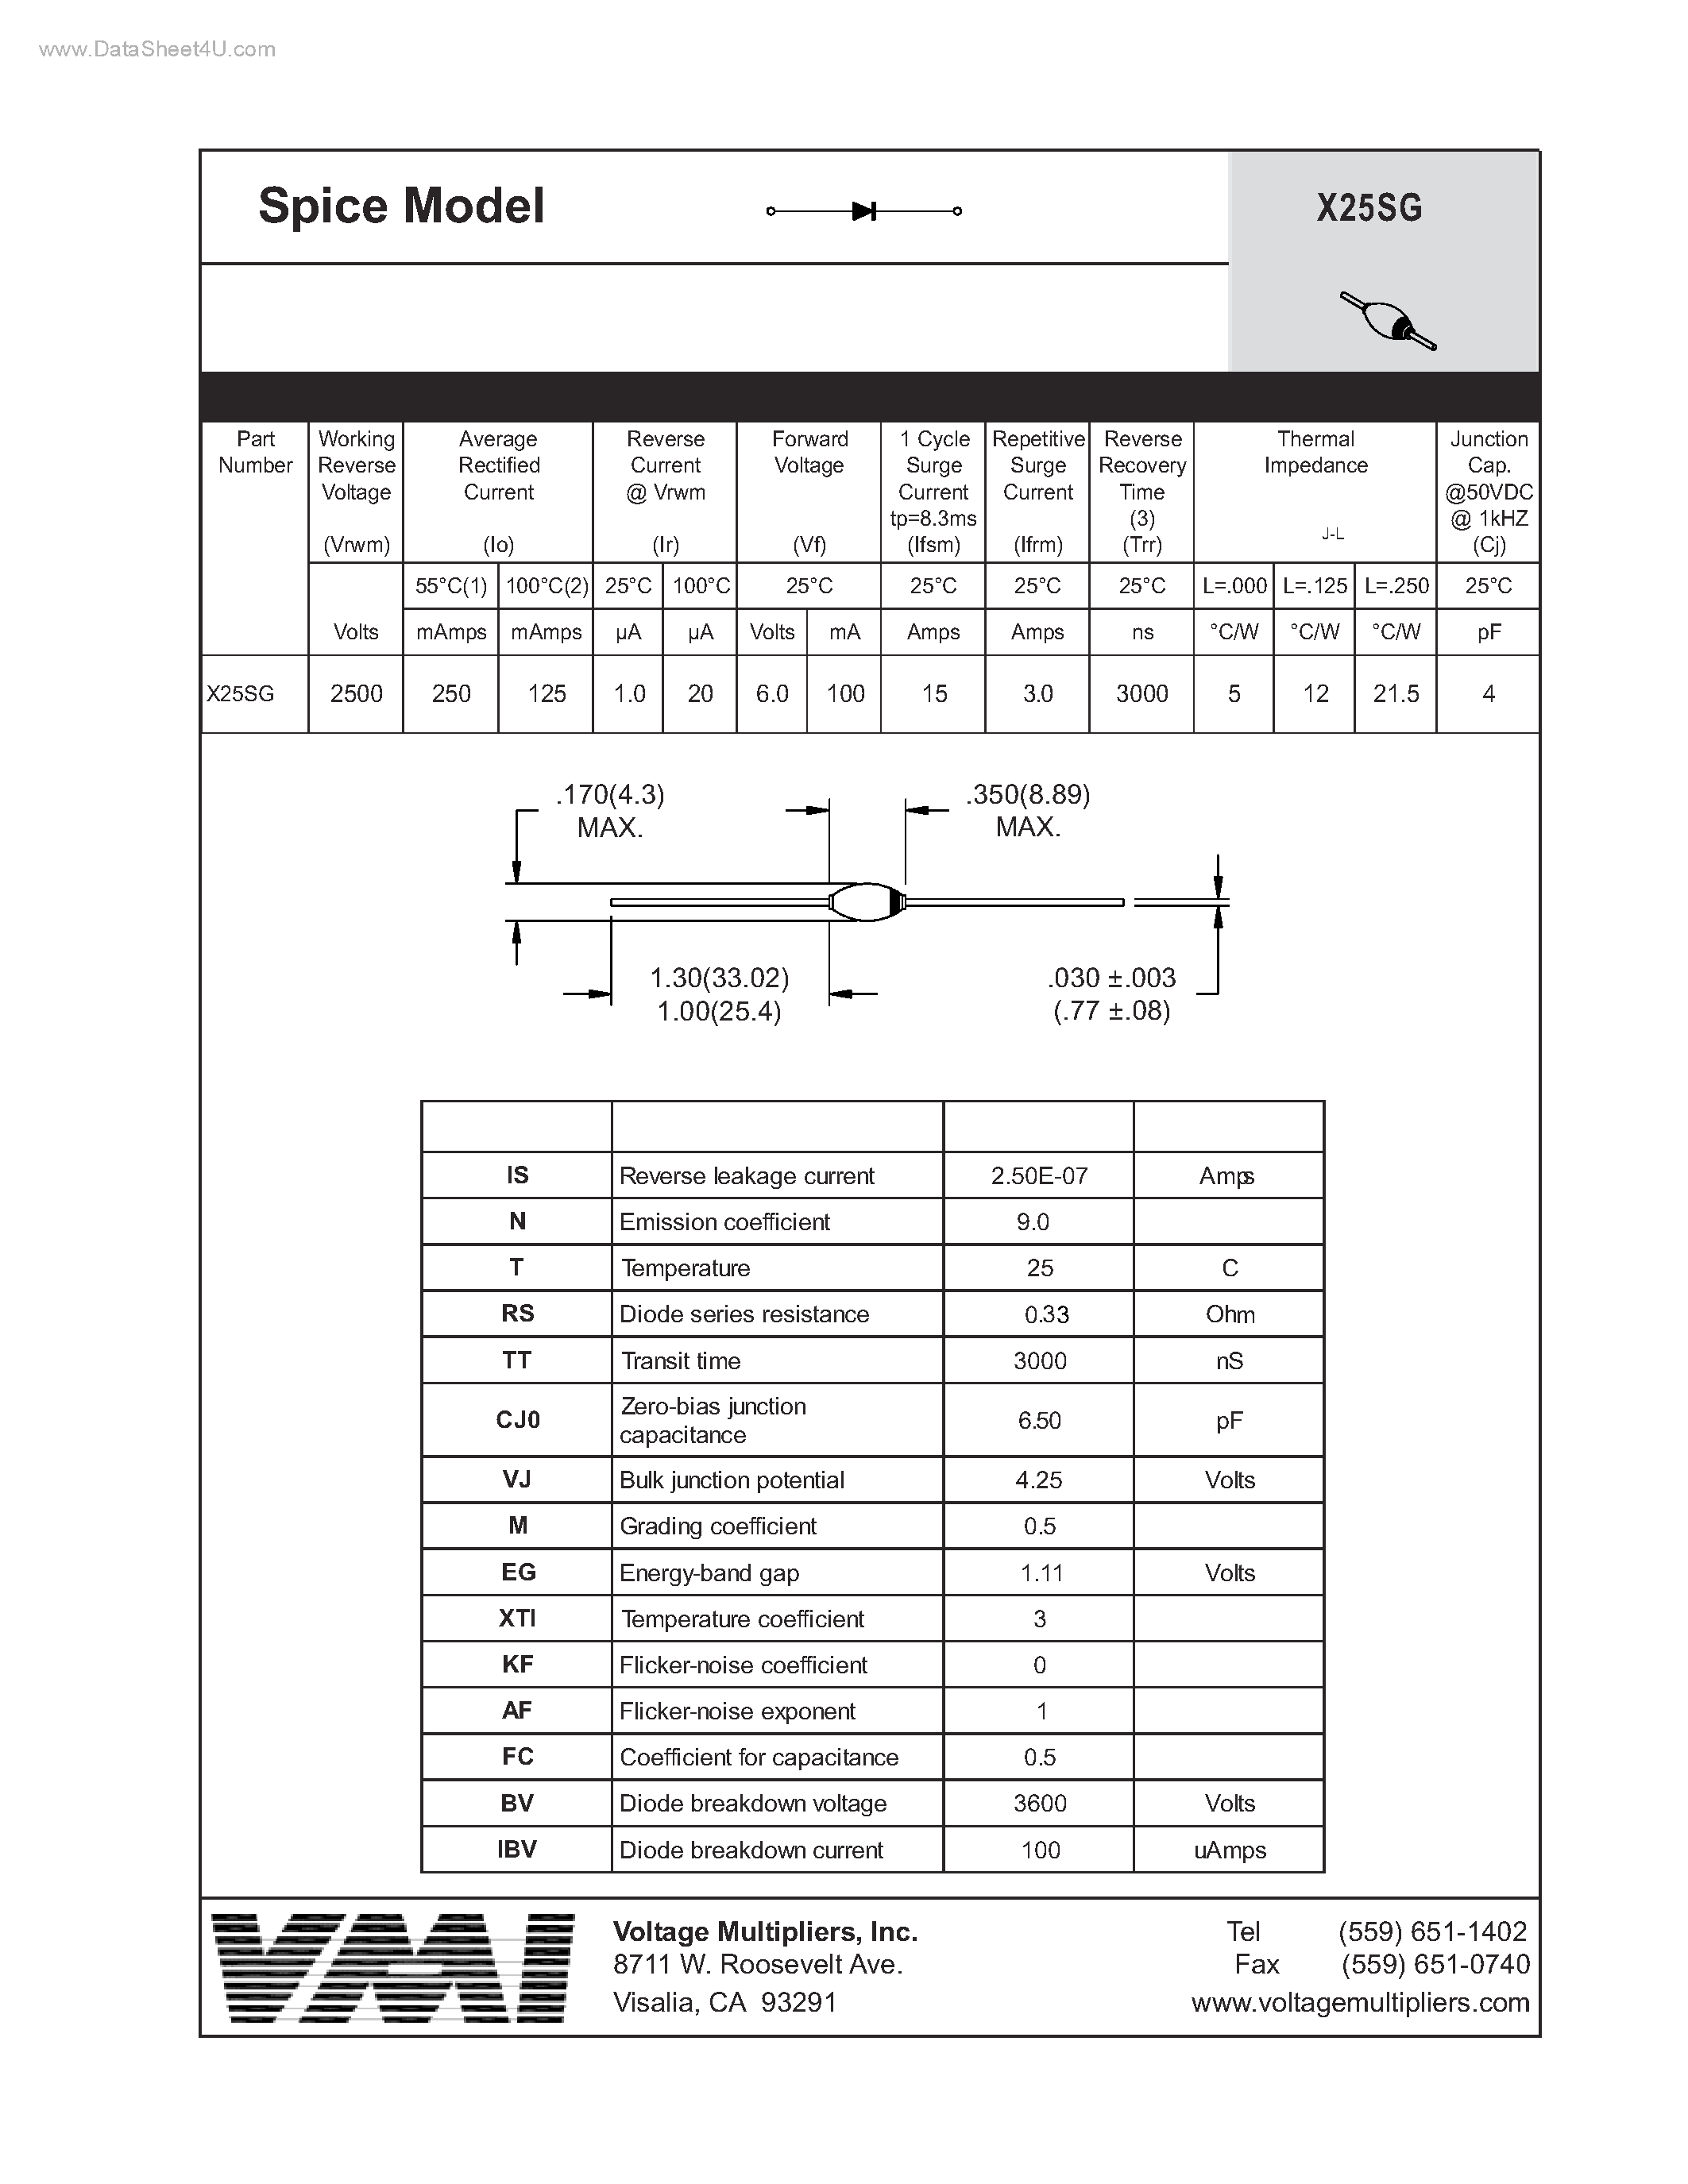 Datasheet X25SG - Spice Model page 1